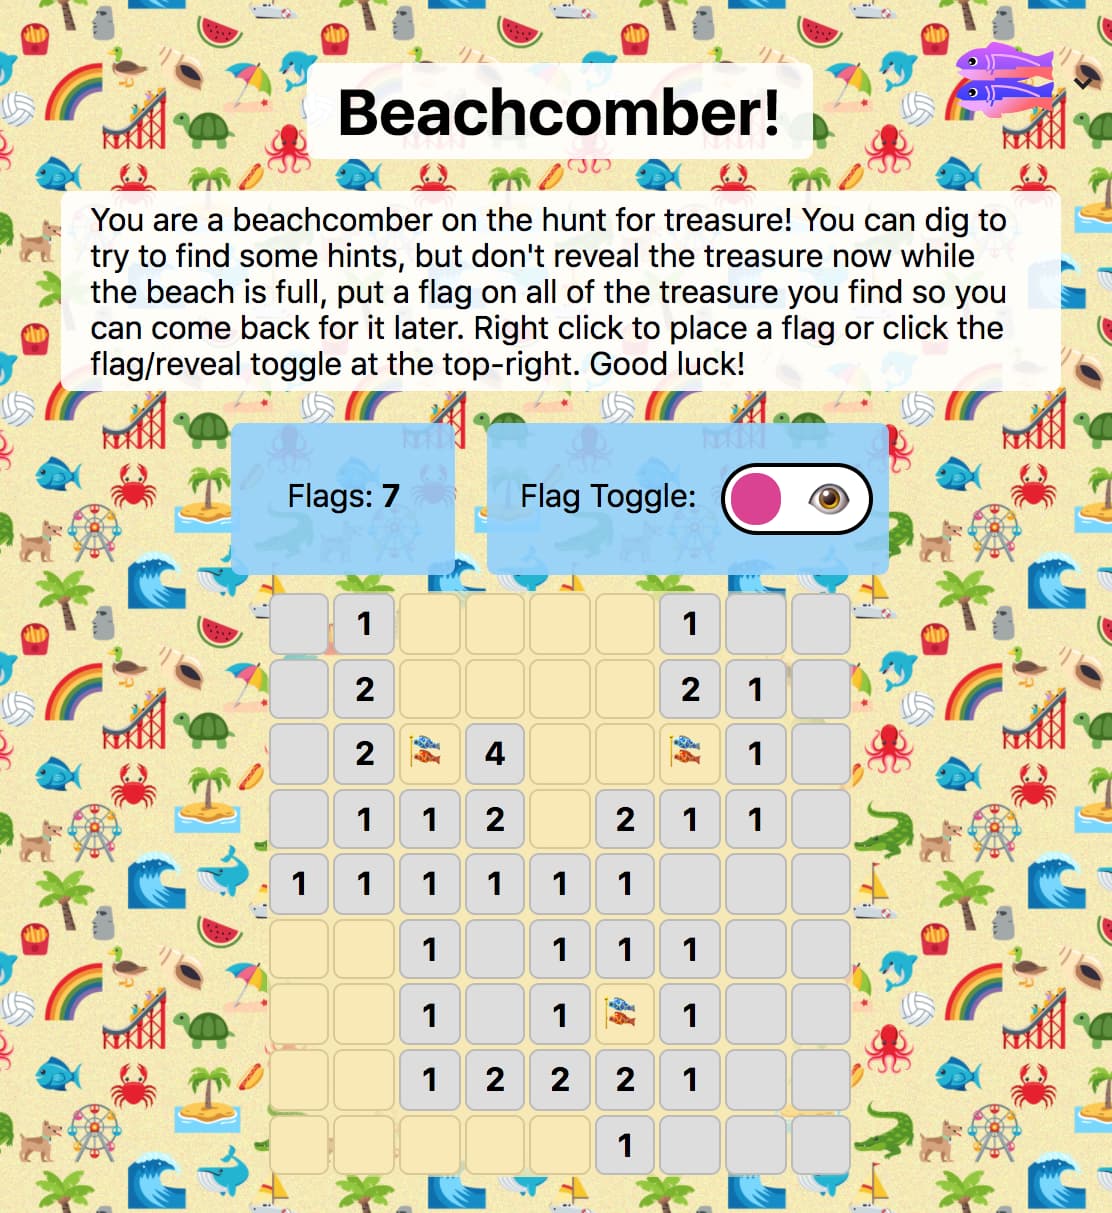 A screenshot of the game